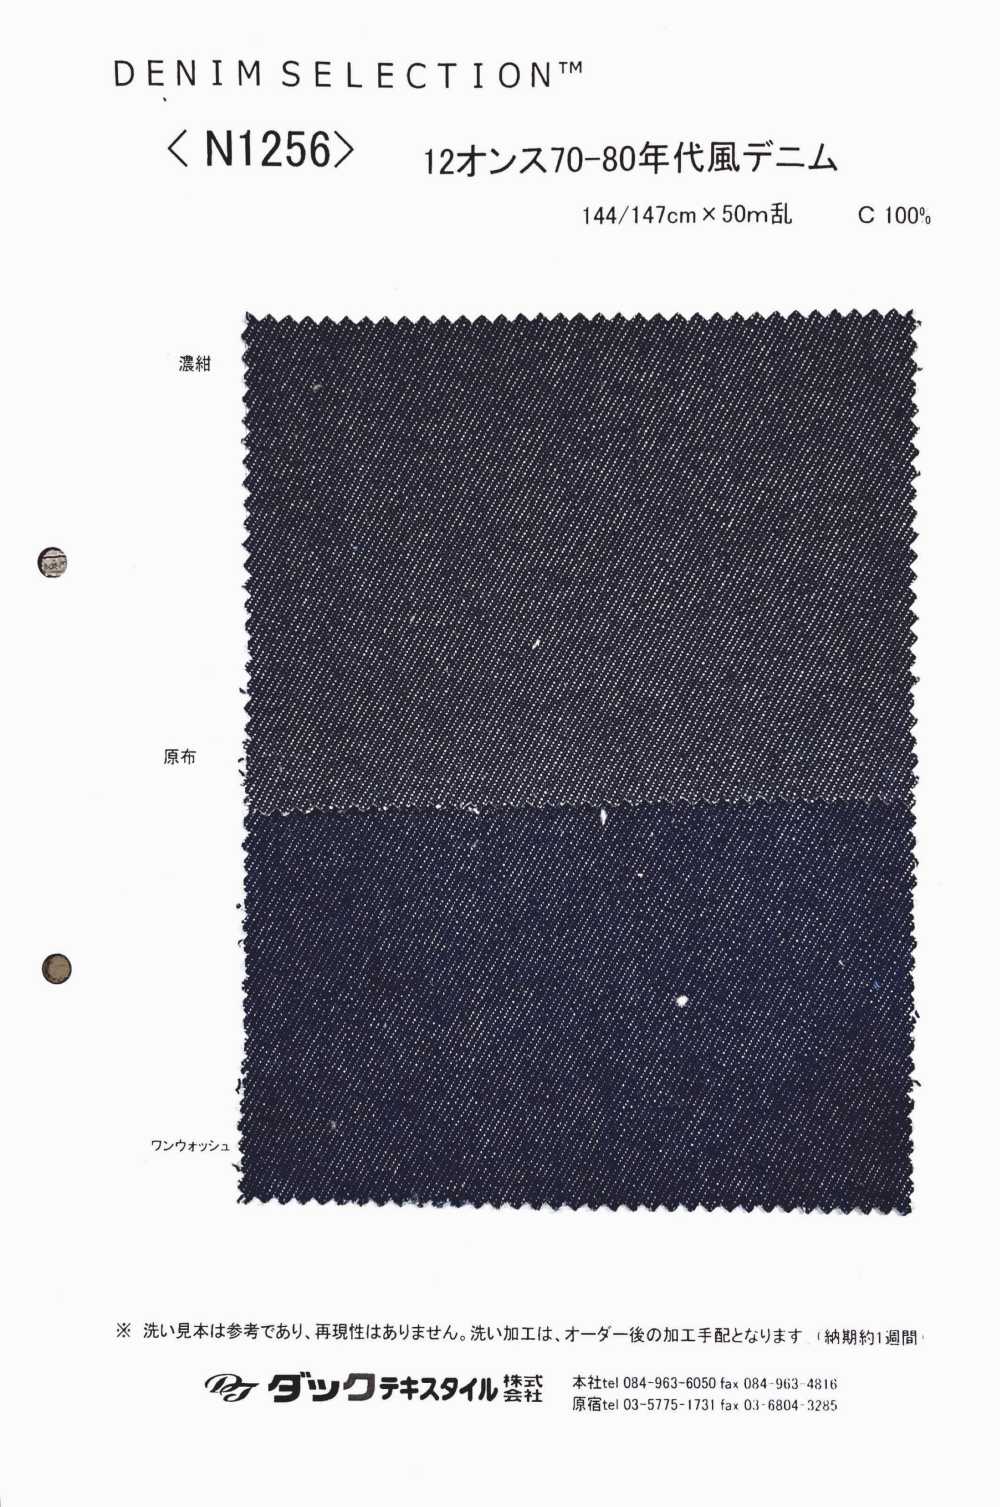 N1256 12 Oz 70er-80er-Denim[Textilgewebe] DUCK TEXTILE